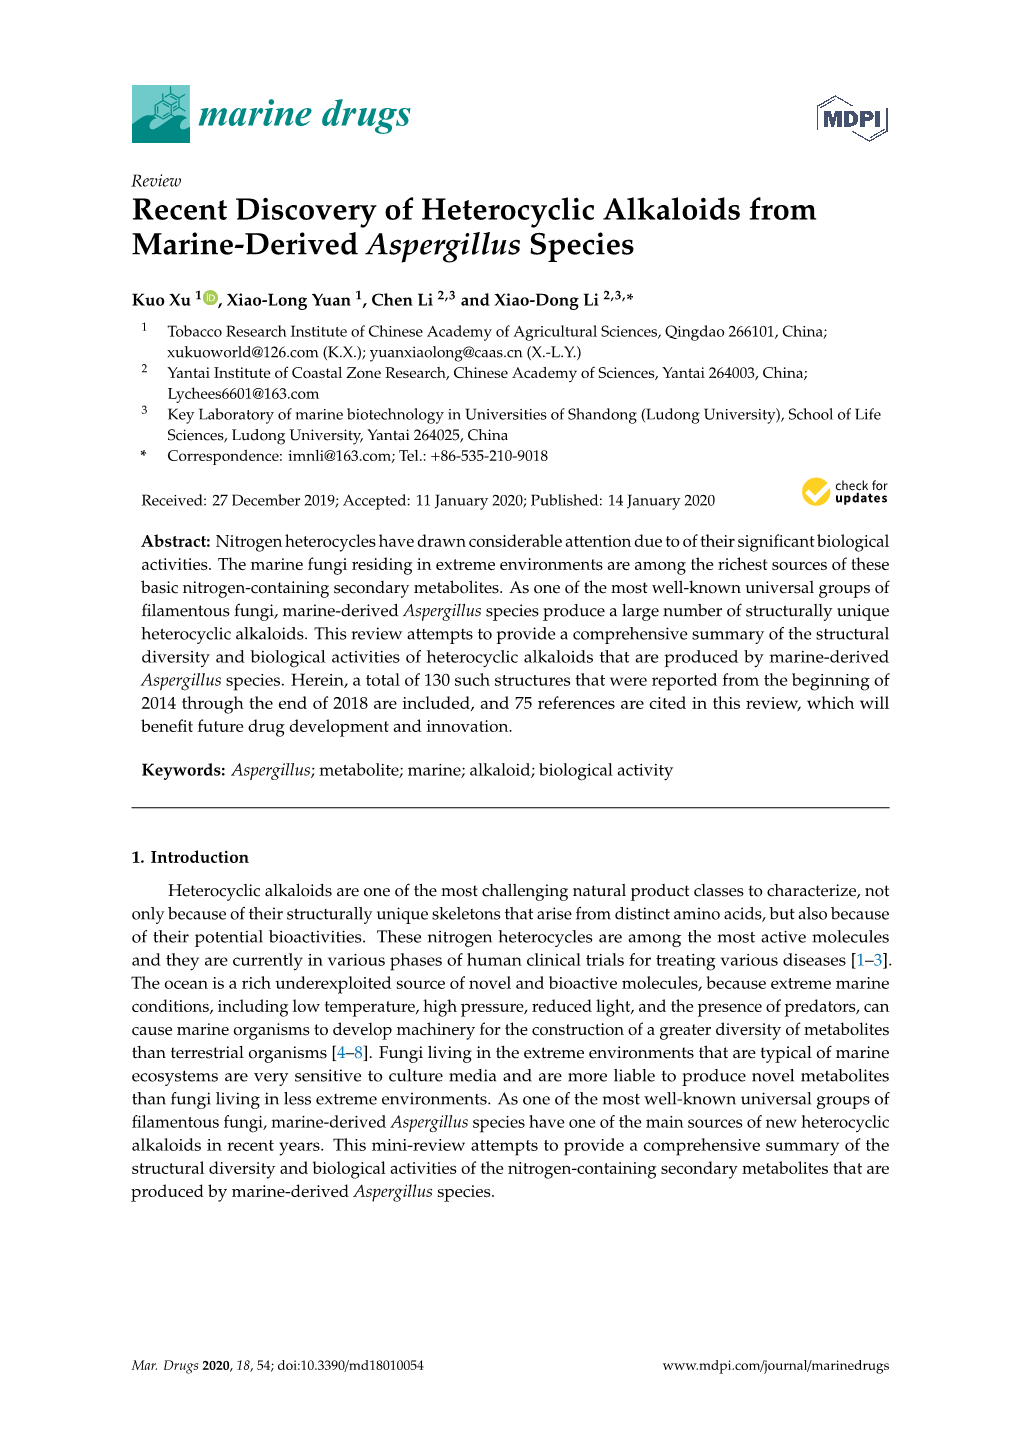 Recent Discovery of Heterocyclic Alkaloids from Marine-Derived Aspergillus Species